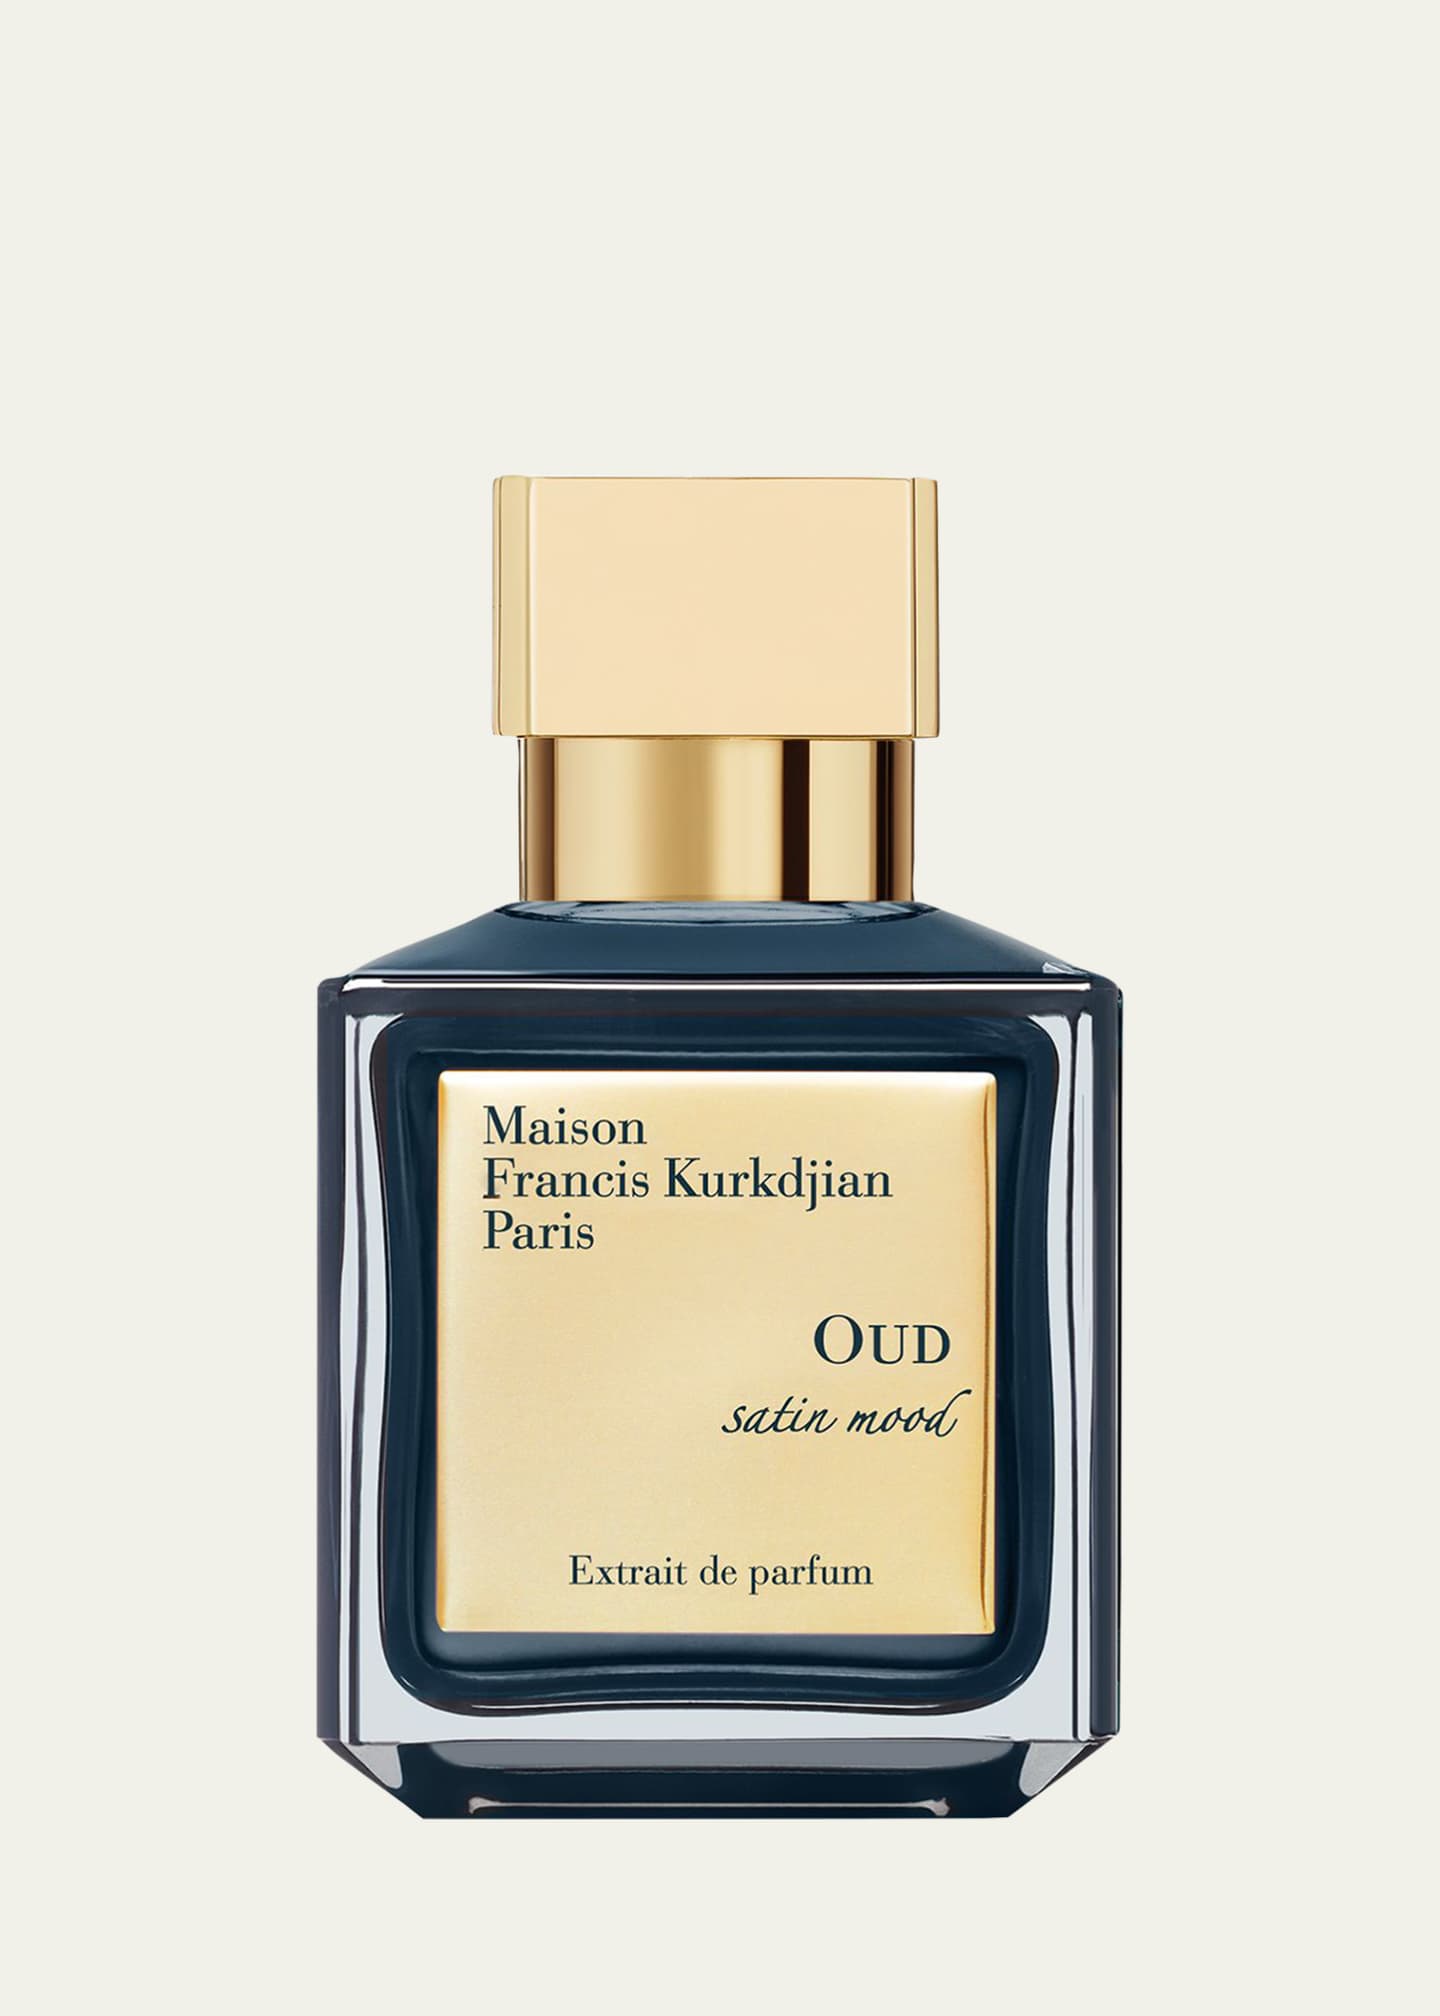 Maison Francis Kurkdjian OUD Satin Mood Extrait de Parfum, 2.4 oz. Image 1 of 2